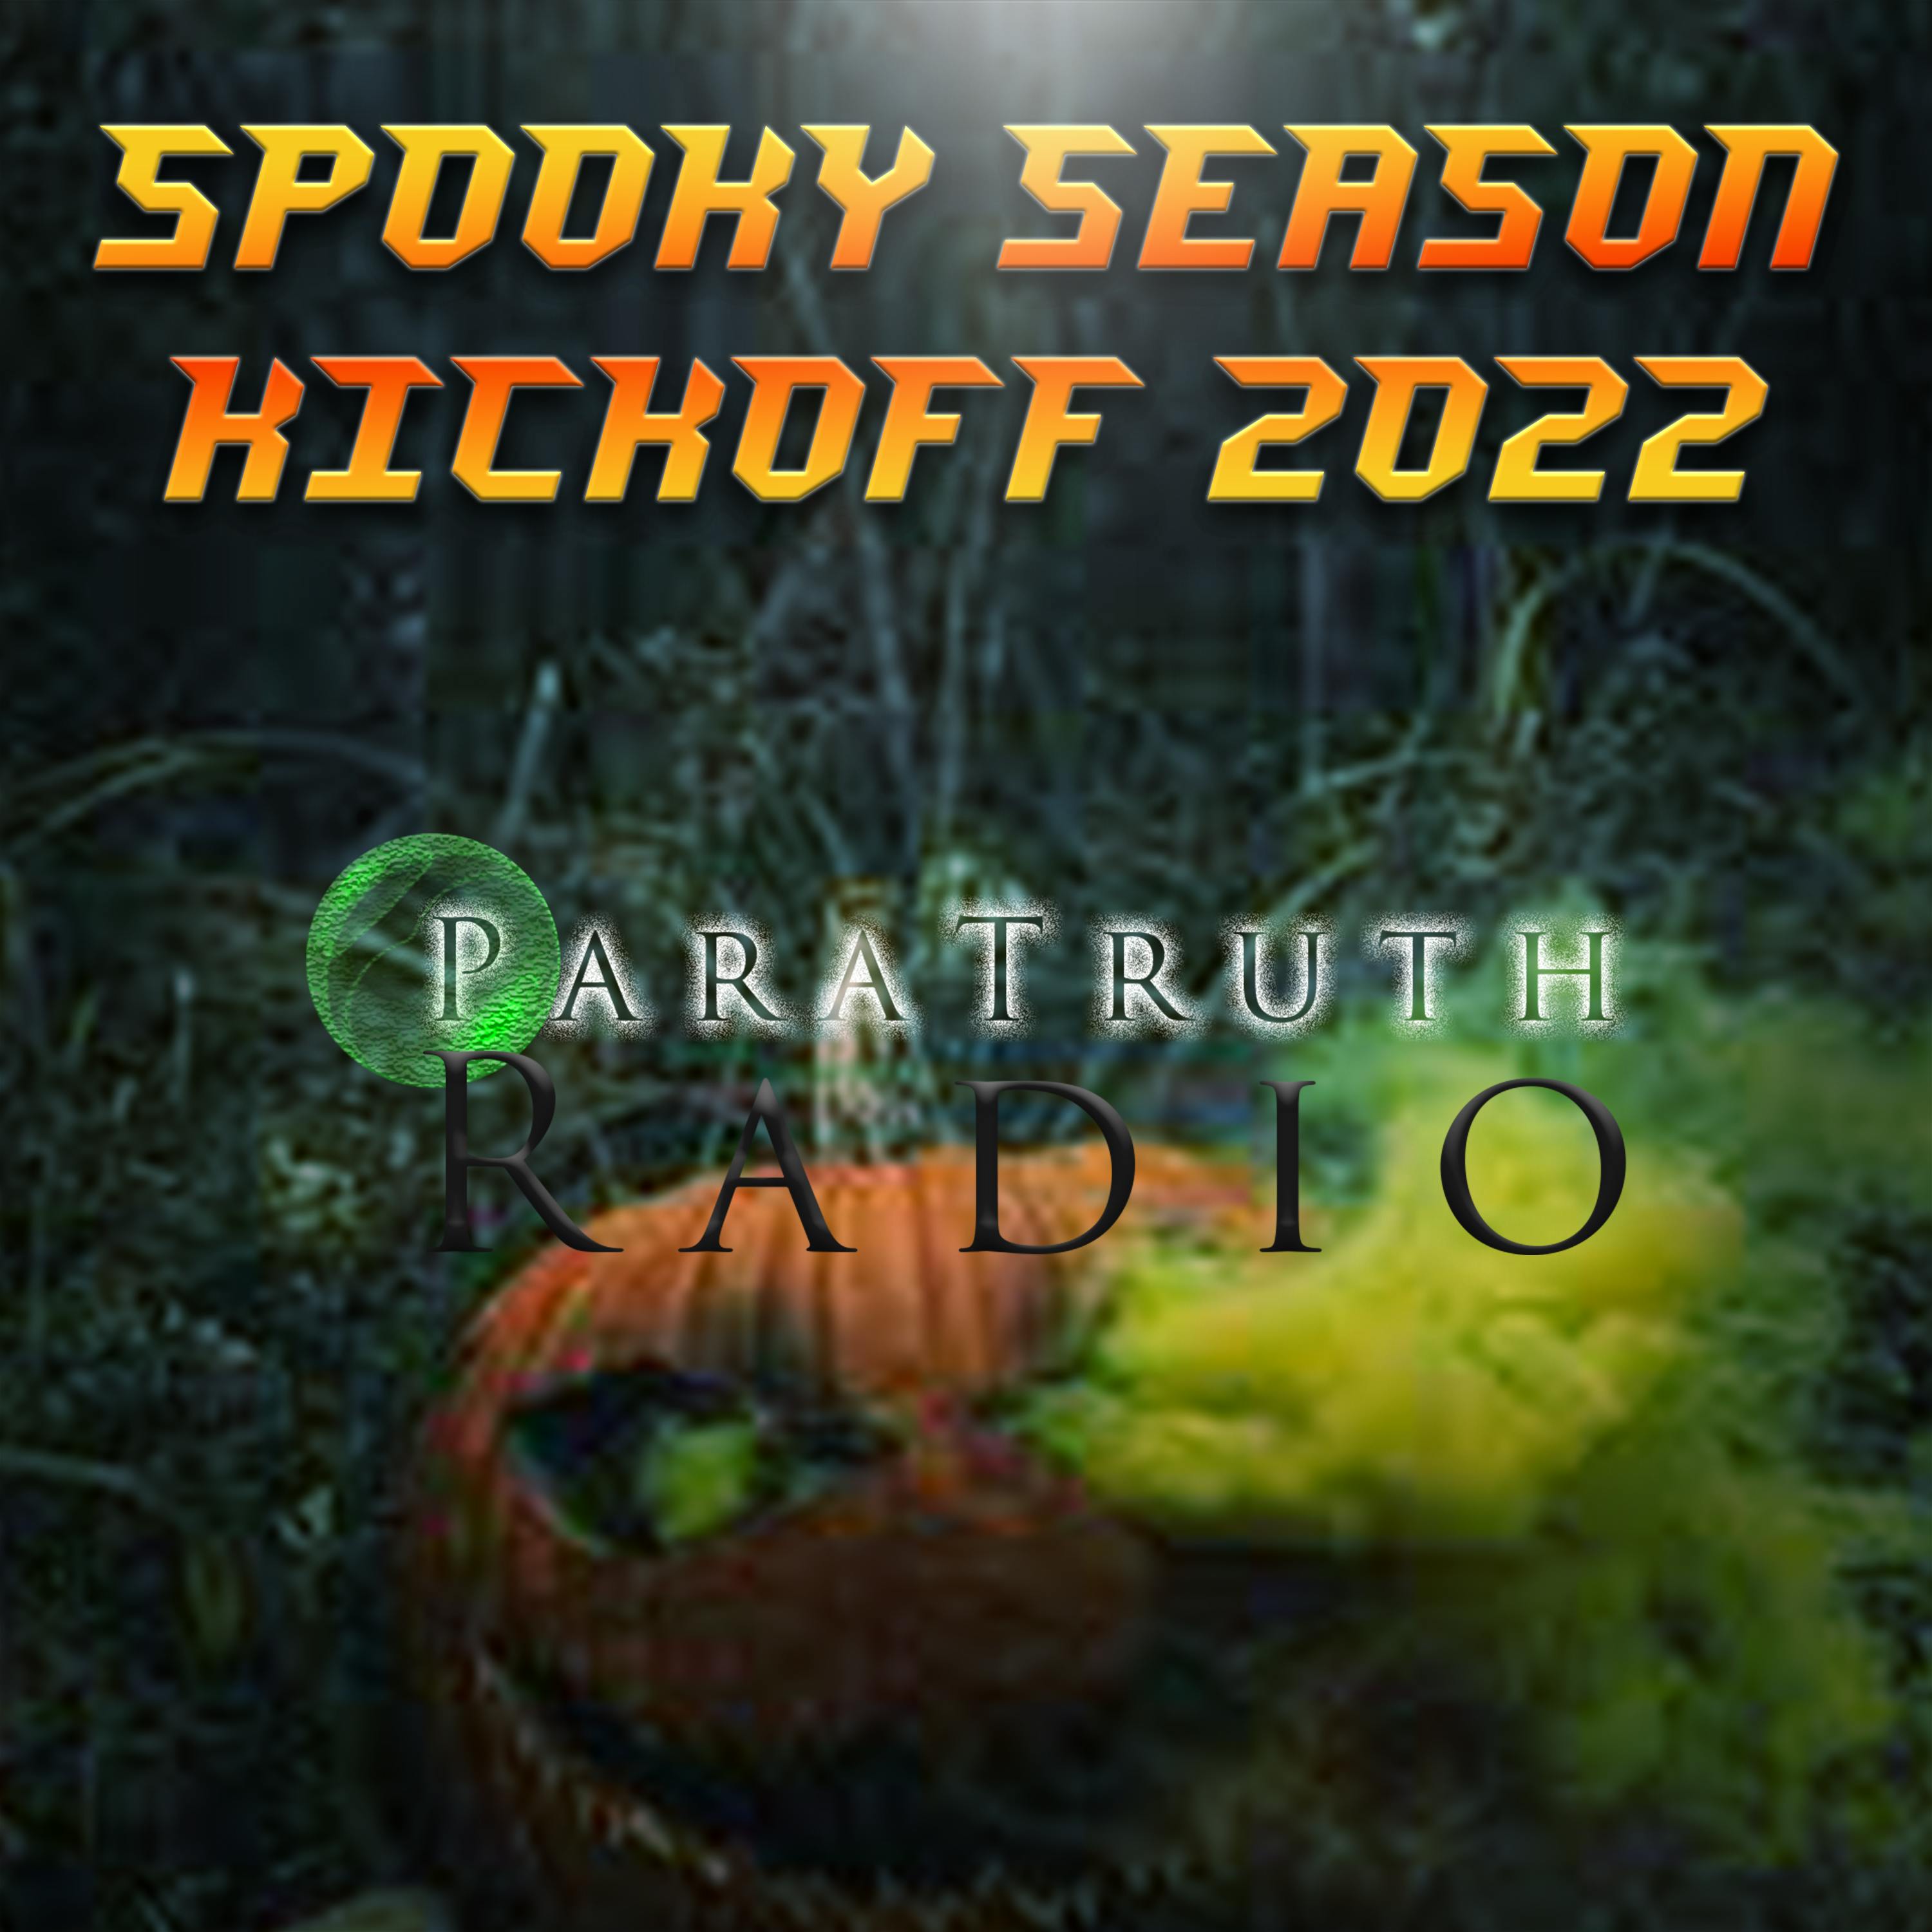 Spooky Season Kickoff 2022 Image